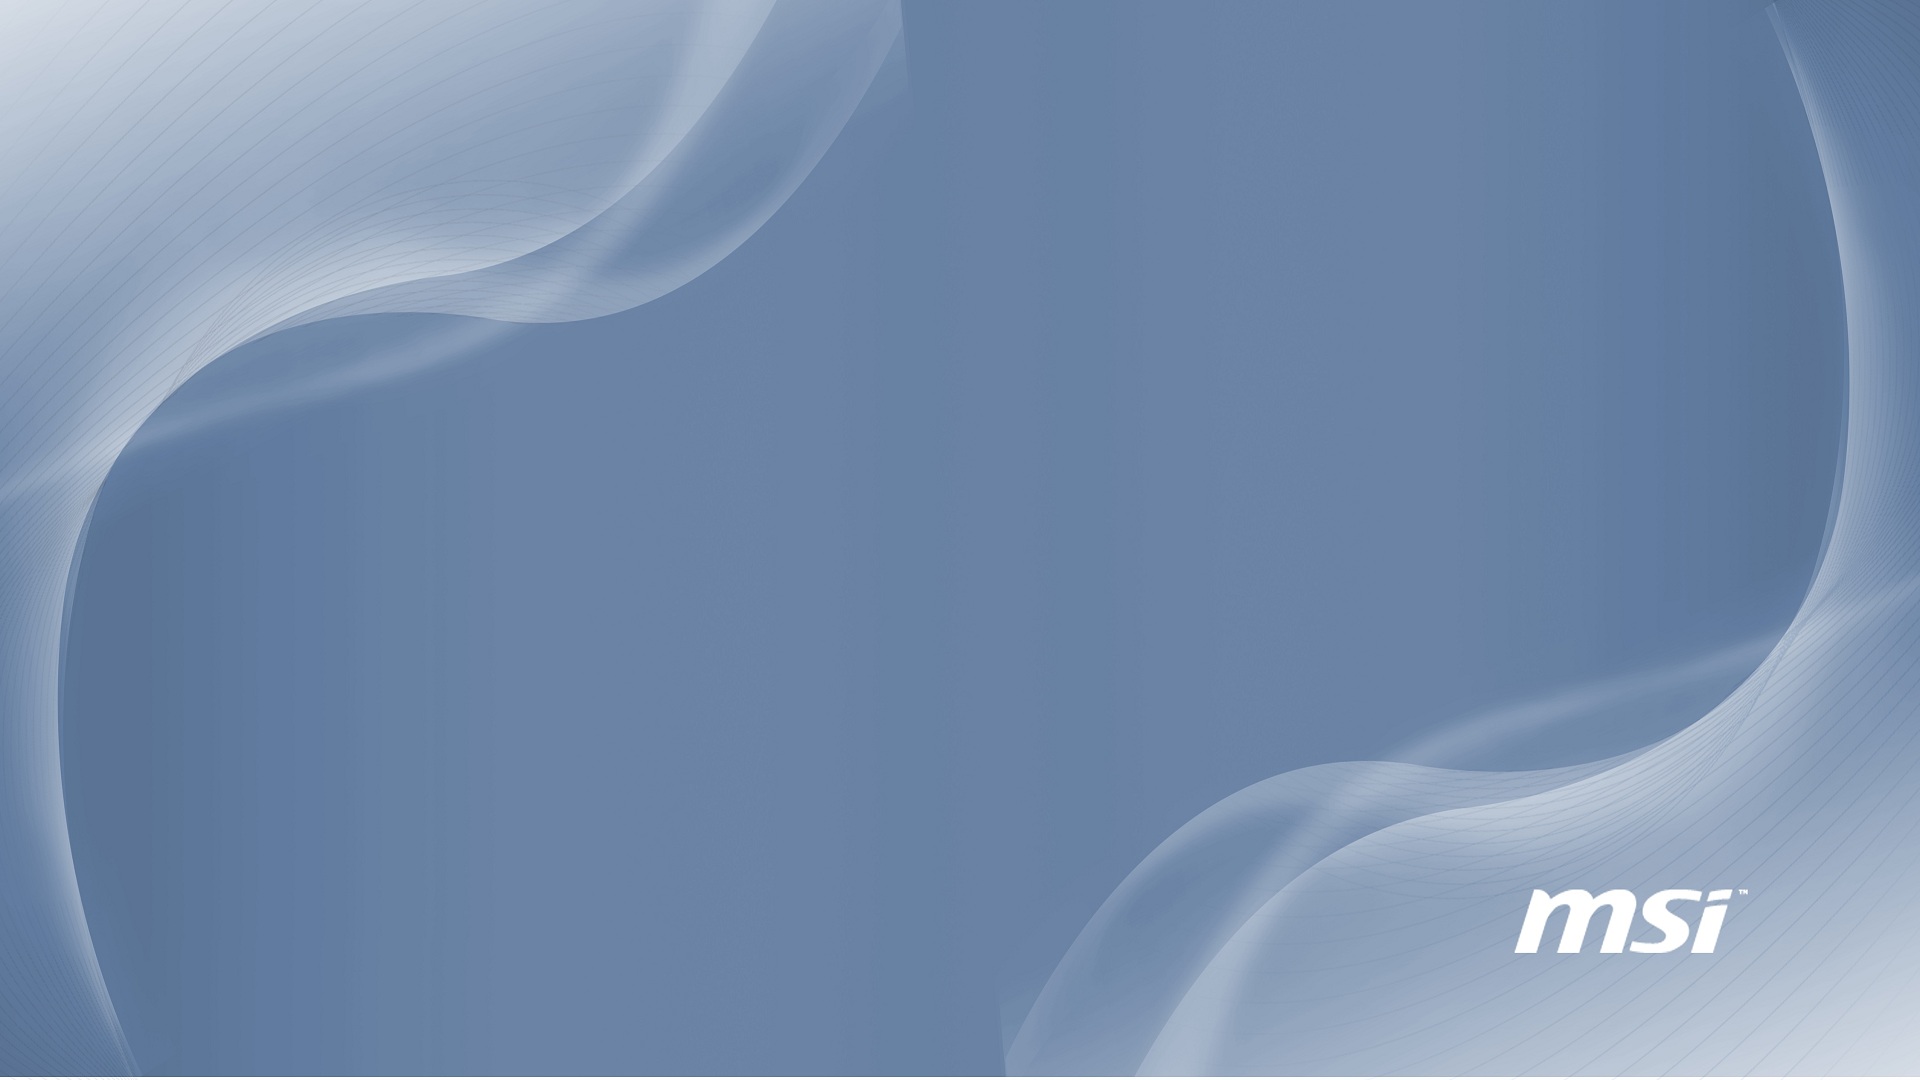 Netbook Msi Wallpaper 1920x1080   Blue HD Desktop Background